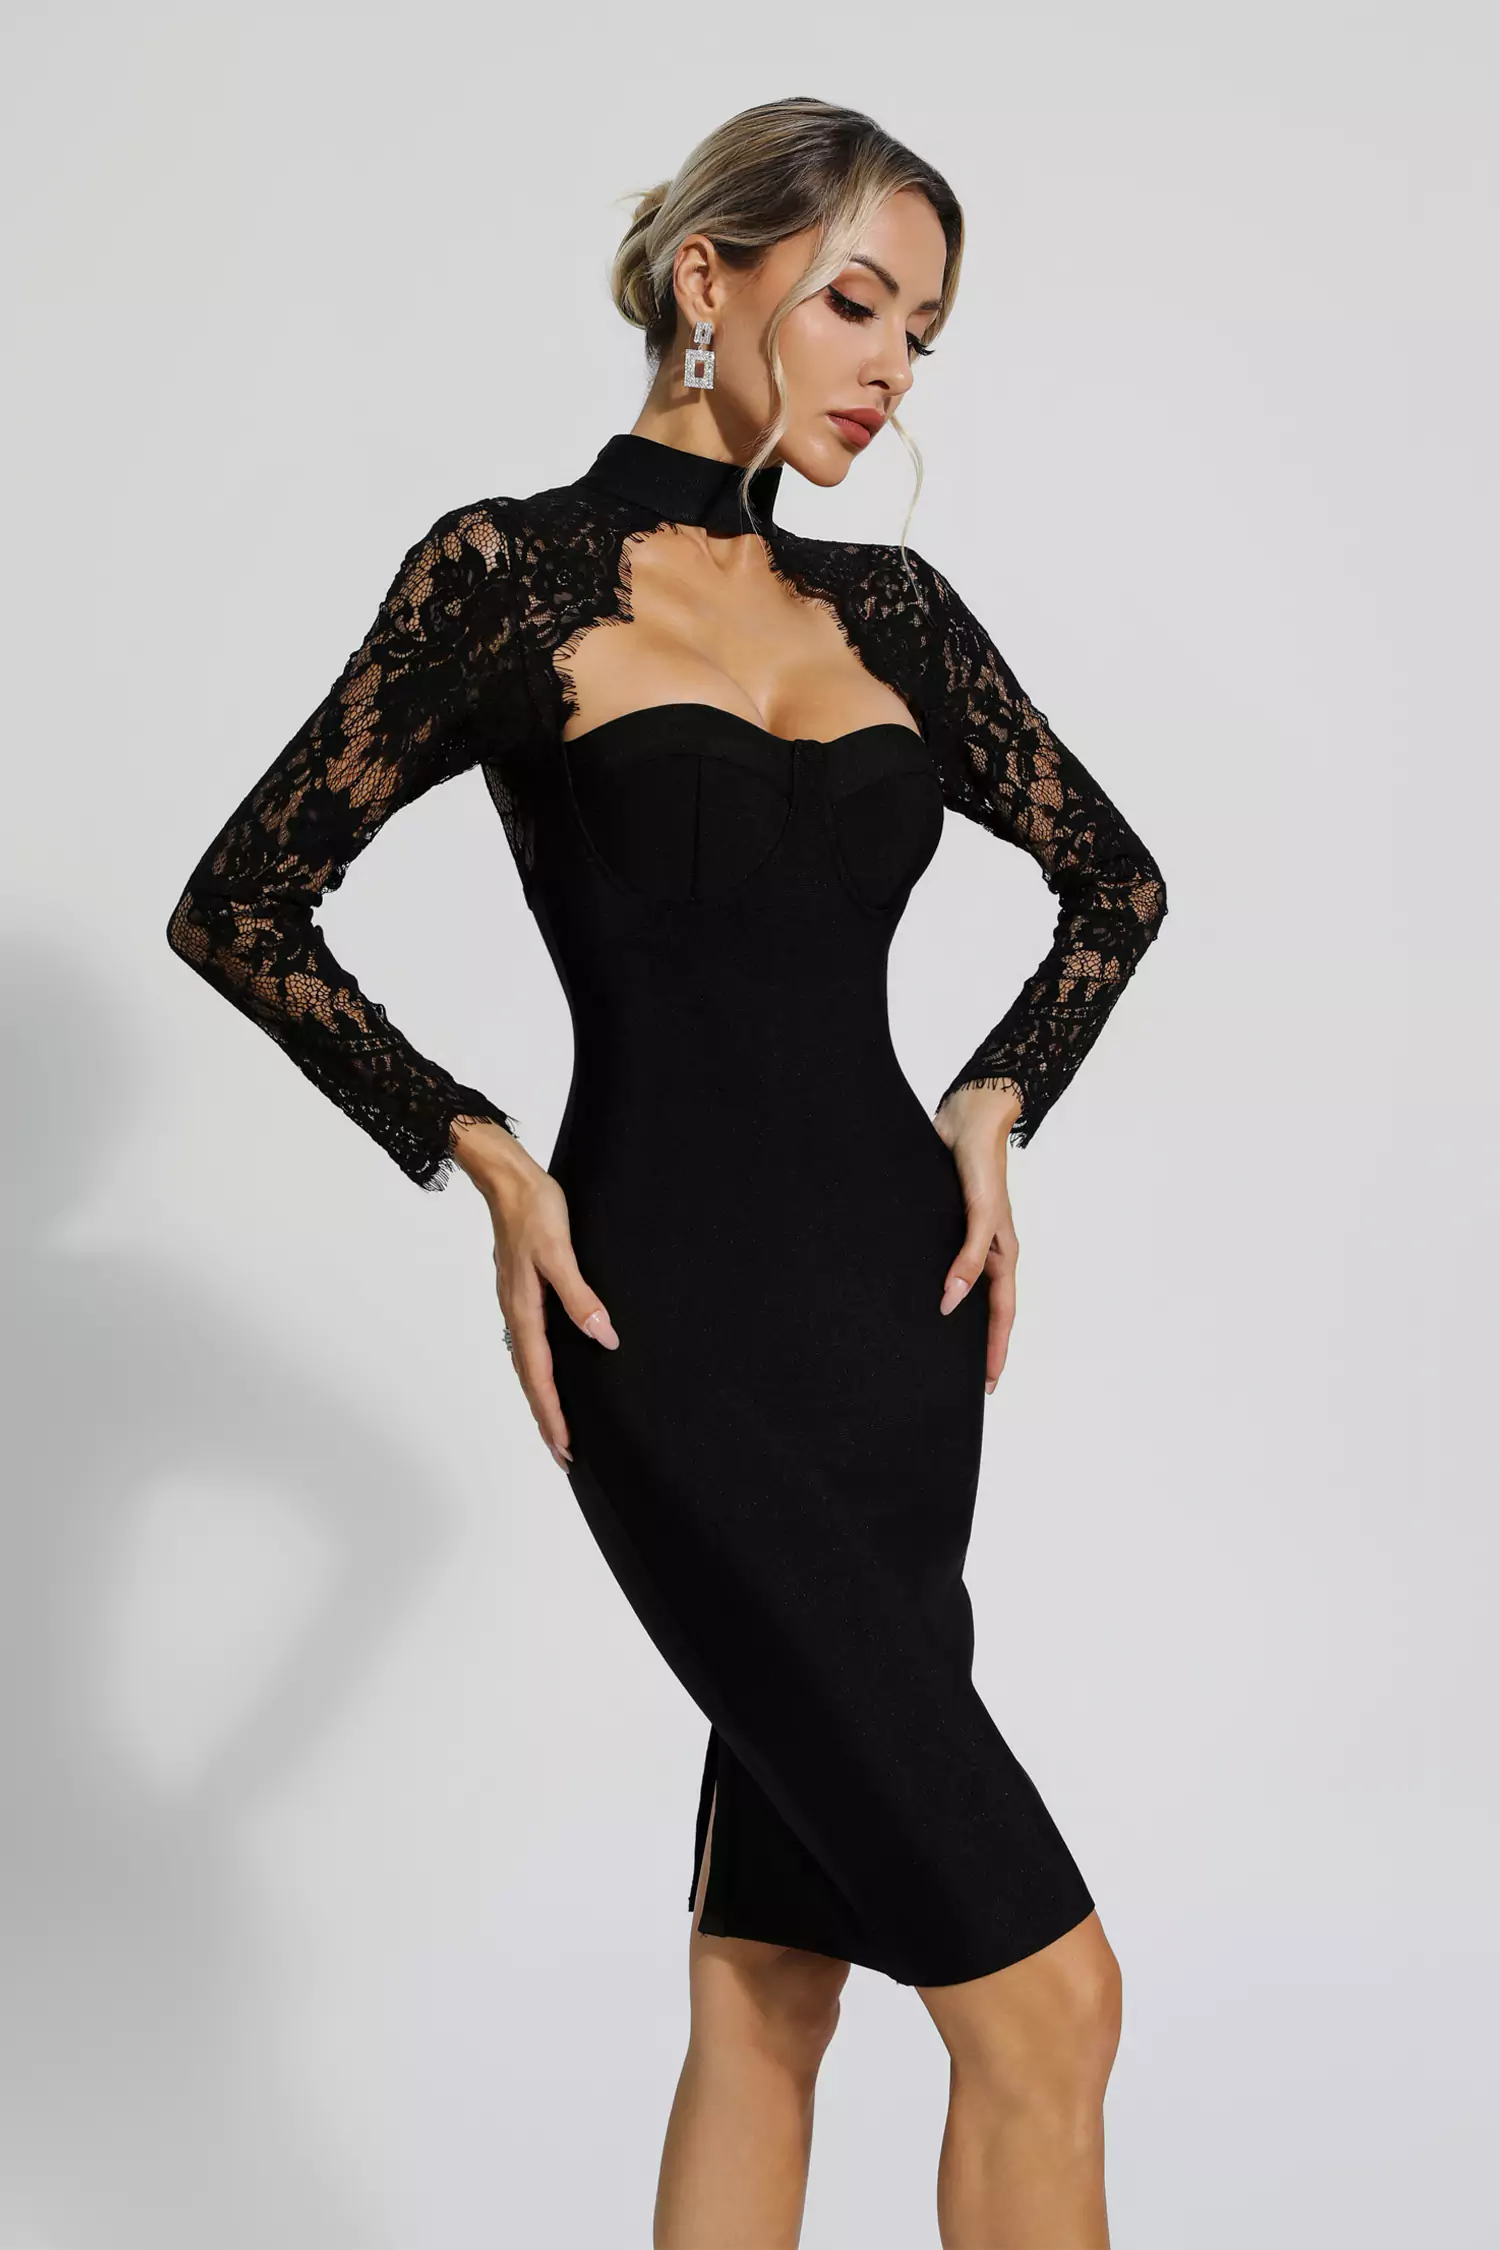 Spree Dress - Black  Fashion dresses, Long black dress, Black dress